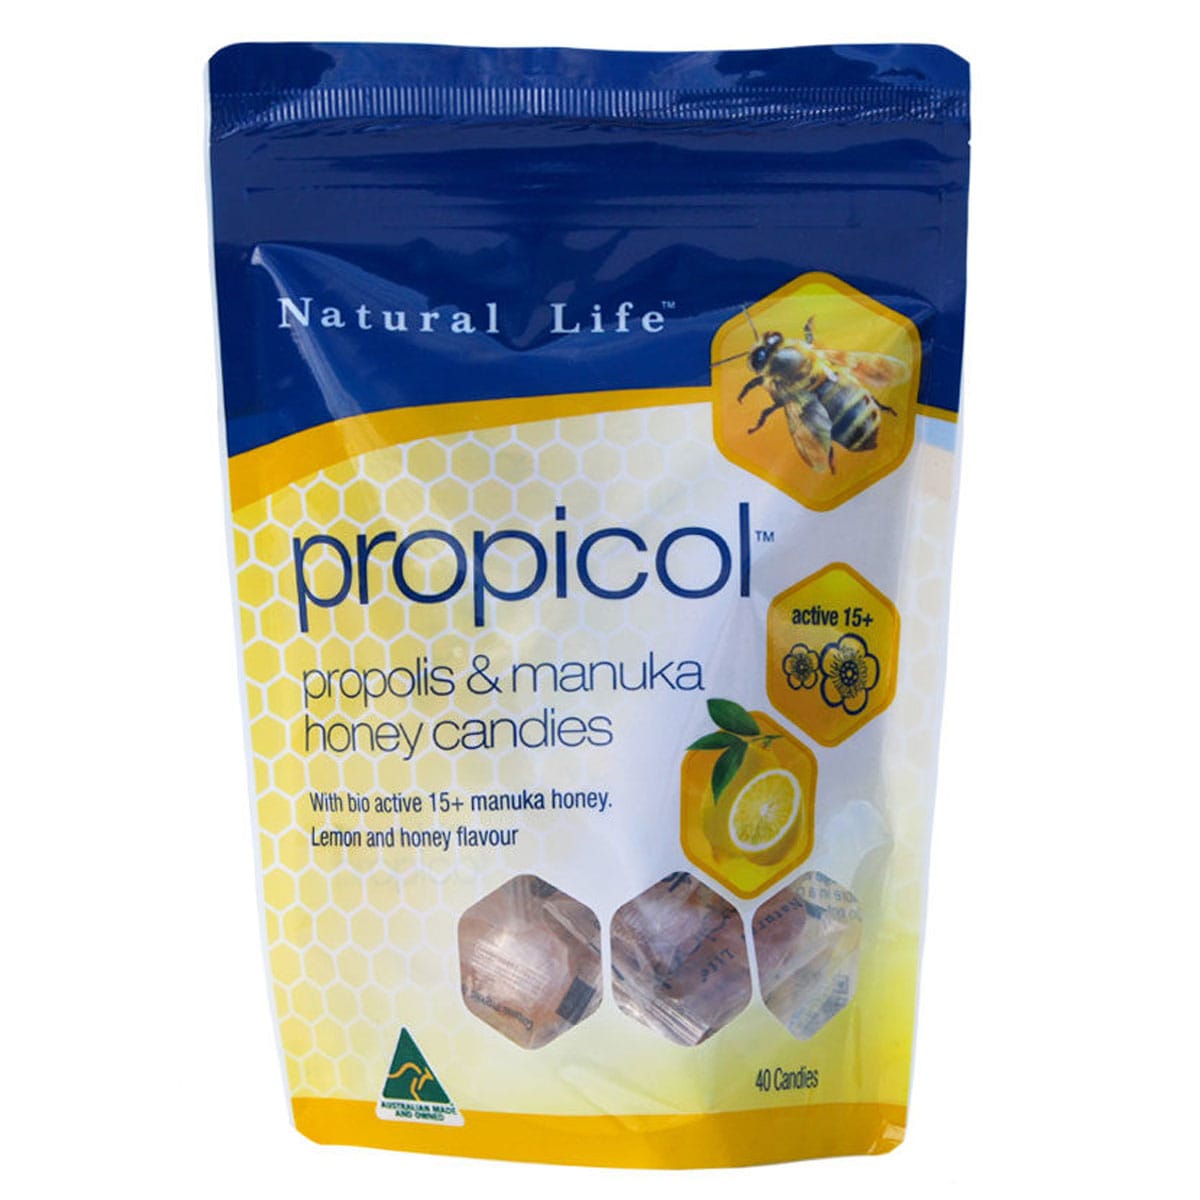 Natural Life Propolis Candy Lemon & Honey 40 Lozenges